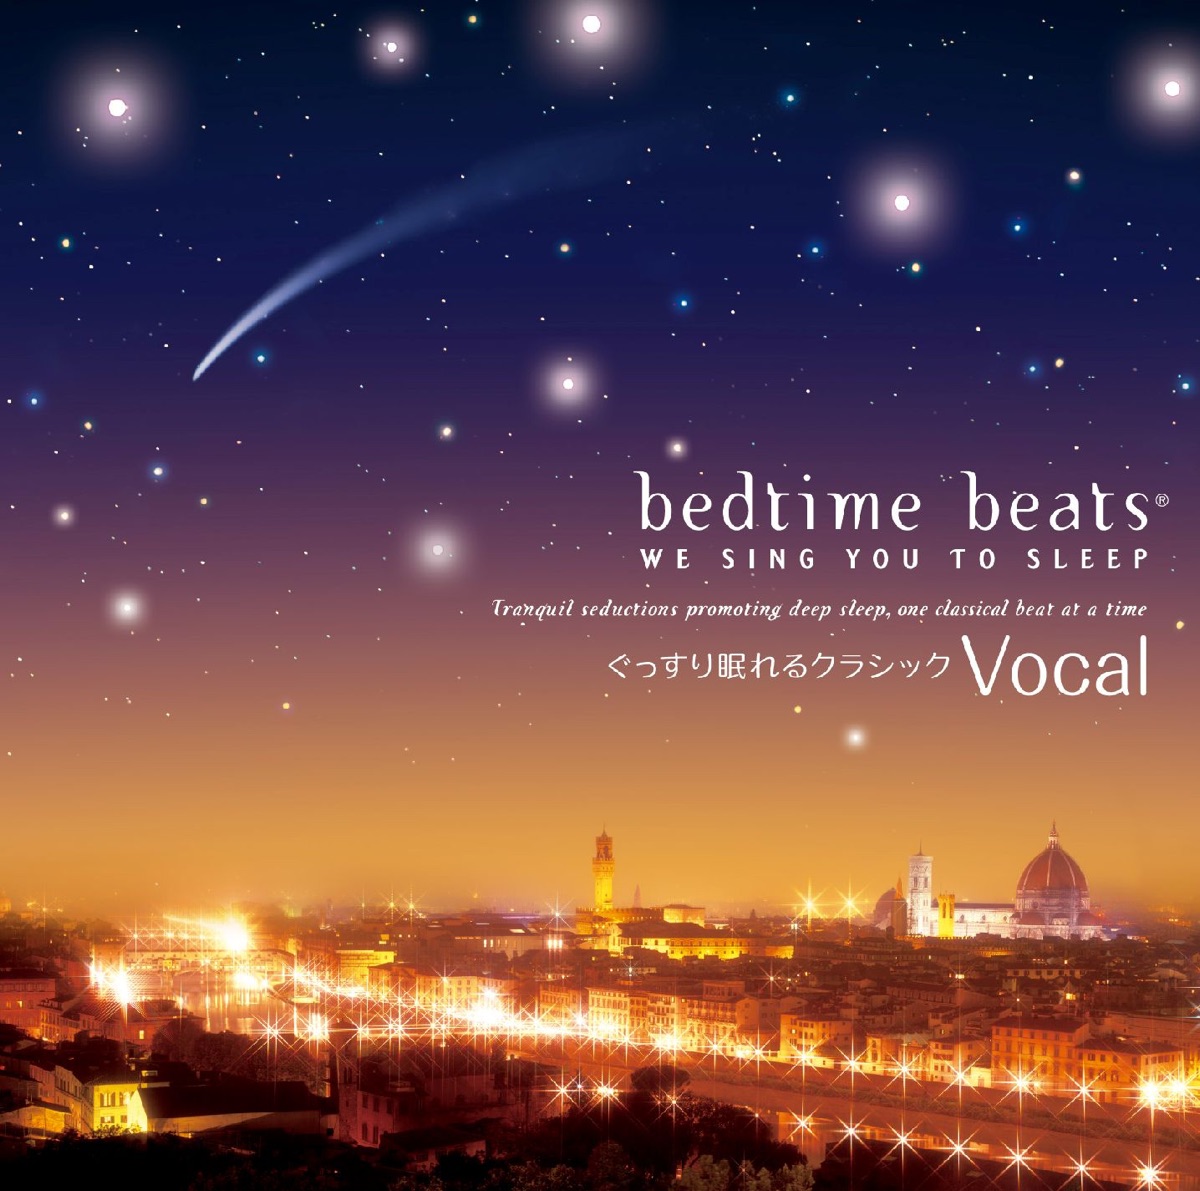 Bedtime Beats - The Secret to Sleep (ぐっすり眠れるクラシック) - Album by Various  Artists - Apple Music